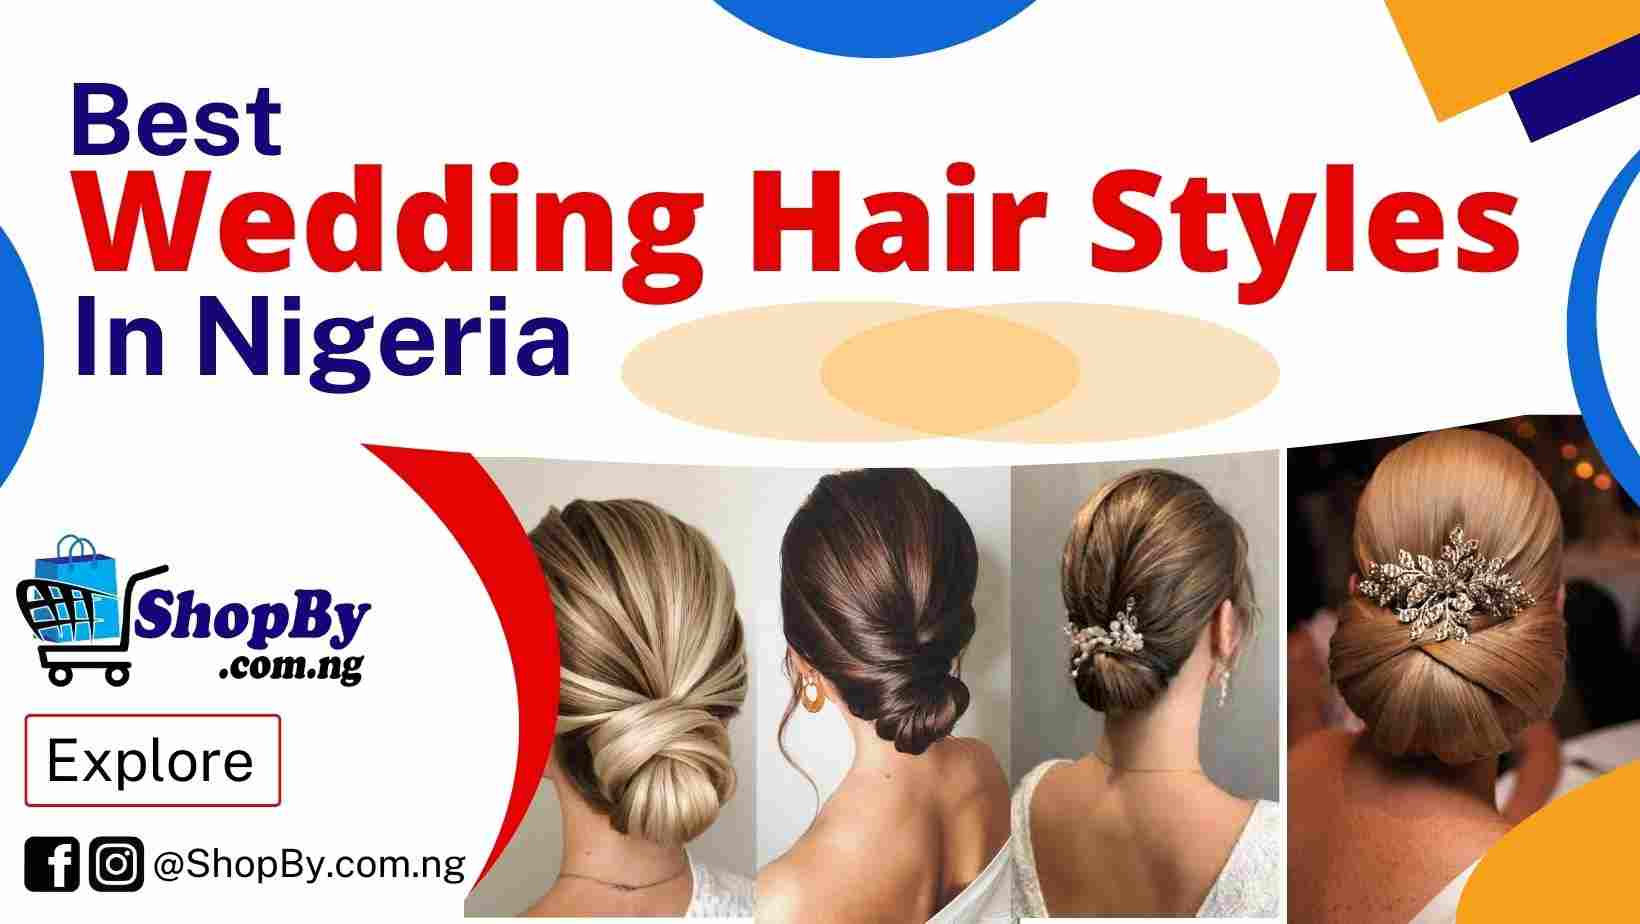 Best Wedding Hair Styles In Nigeria ShopBy Online Mall